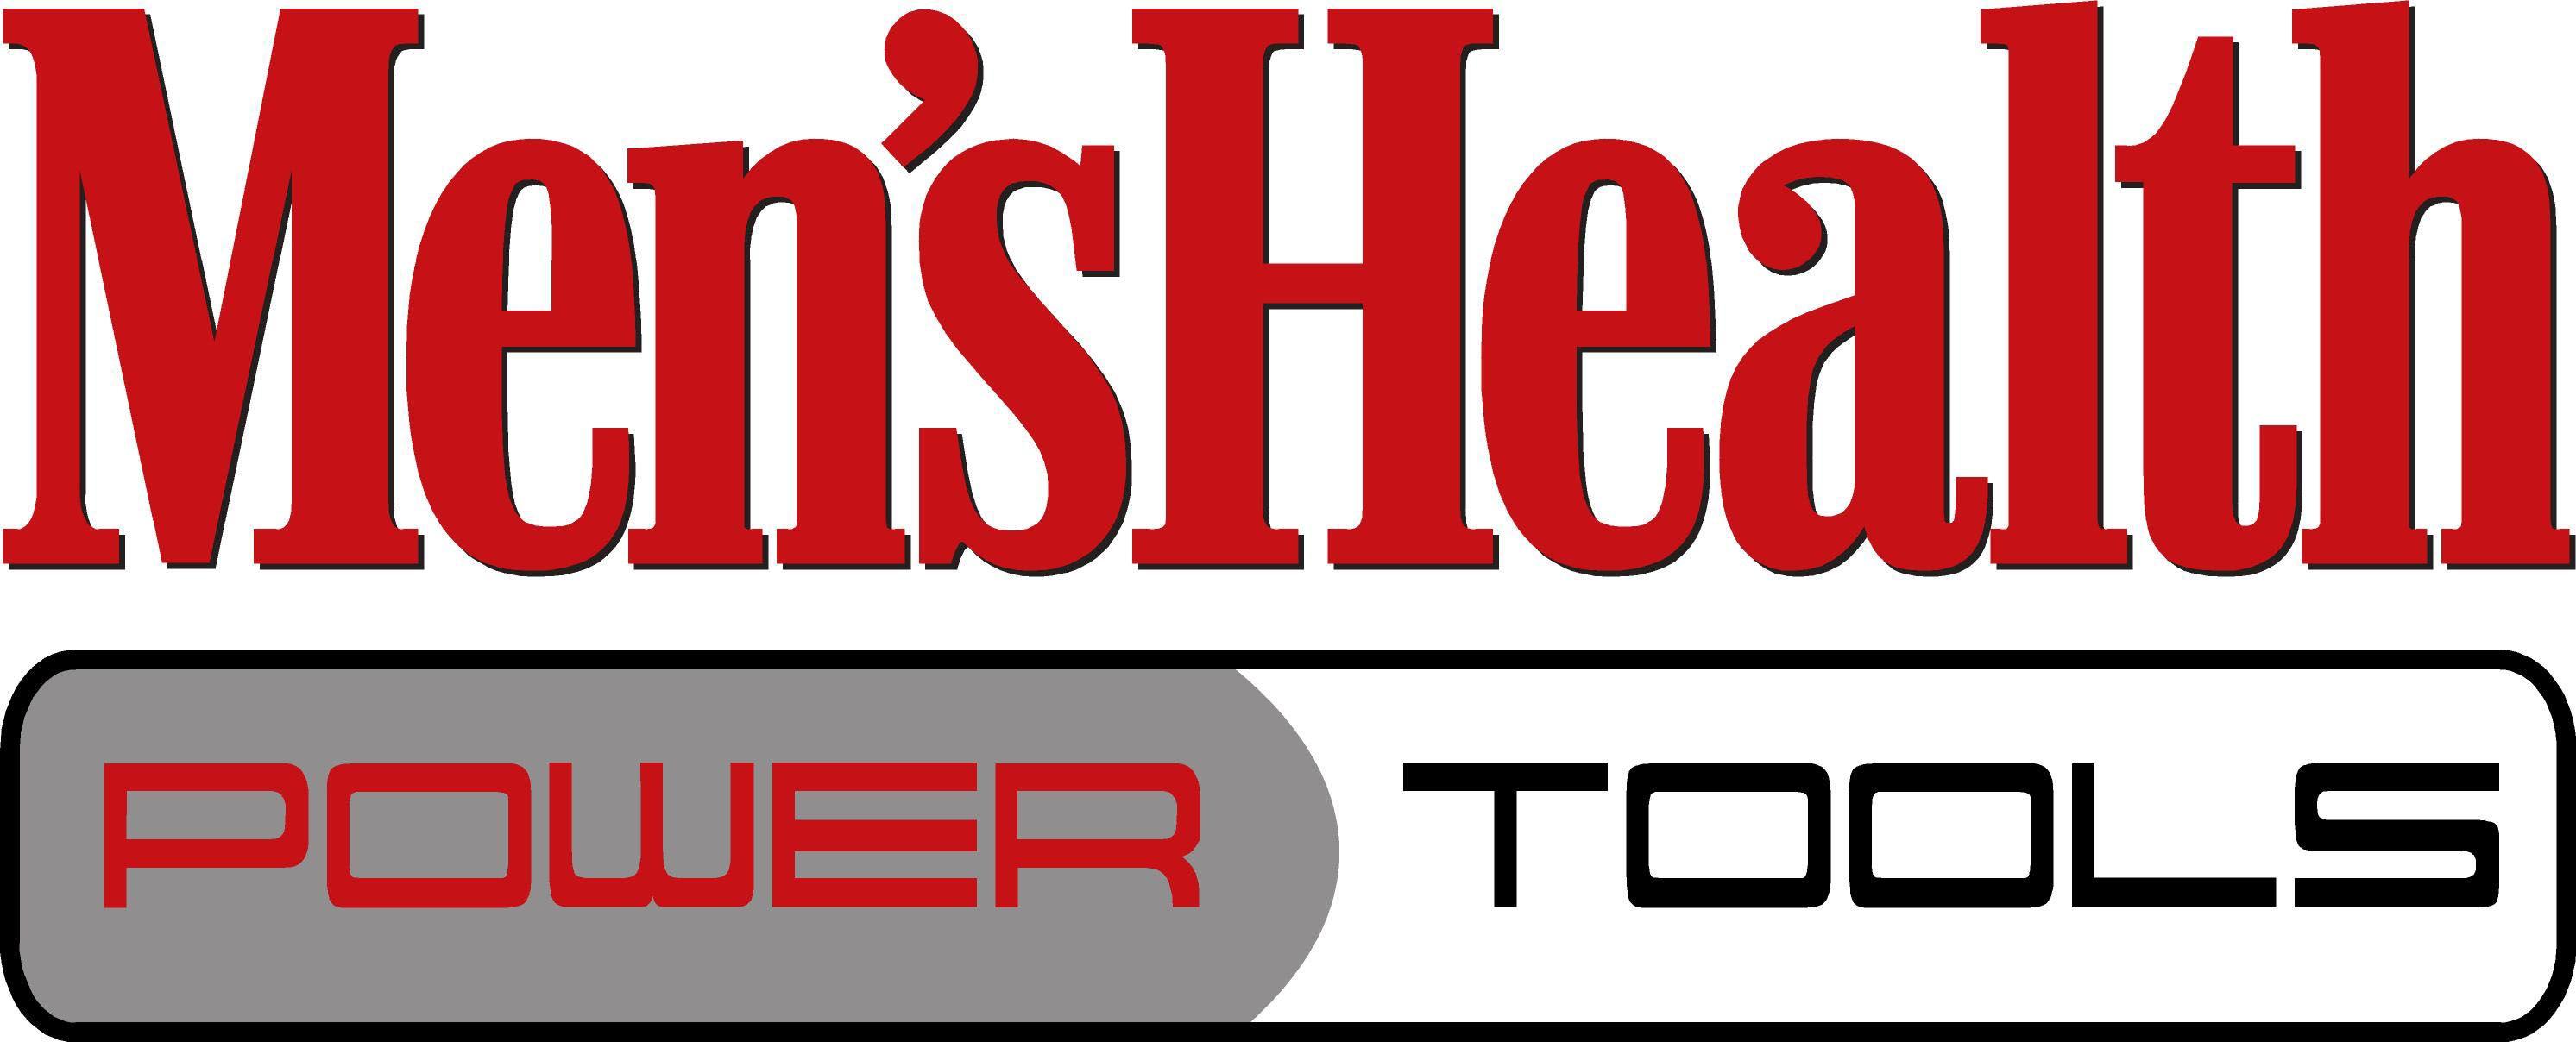 Men's Health Logo - File:Menshealth powertools logo.jpg - Wikimedia Commons